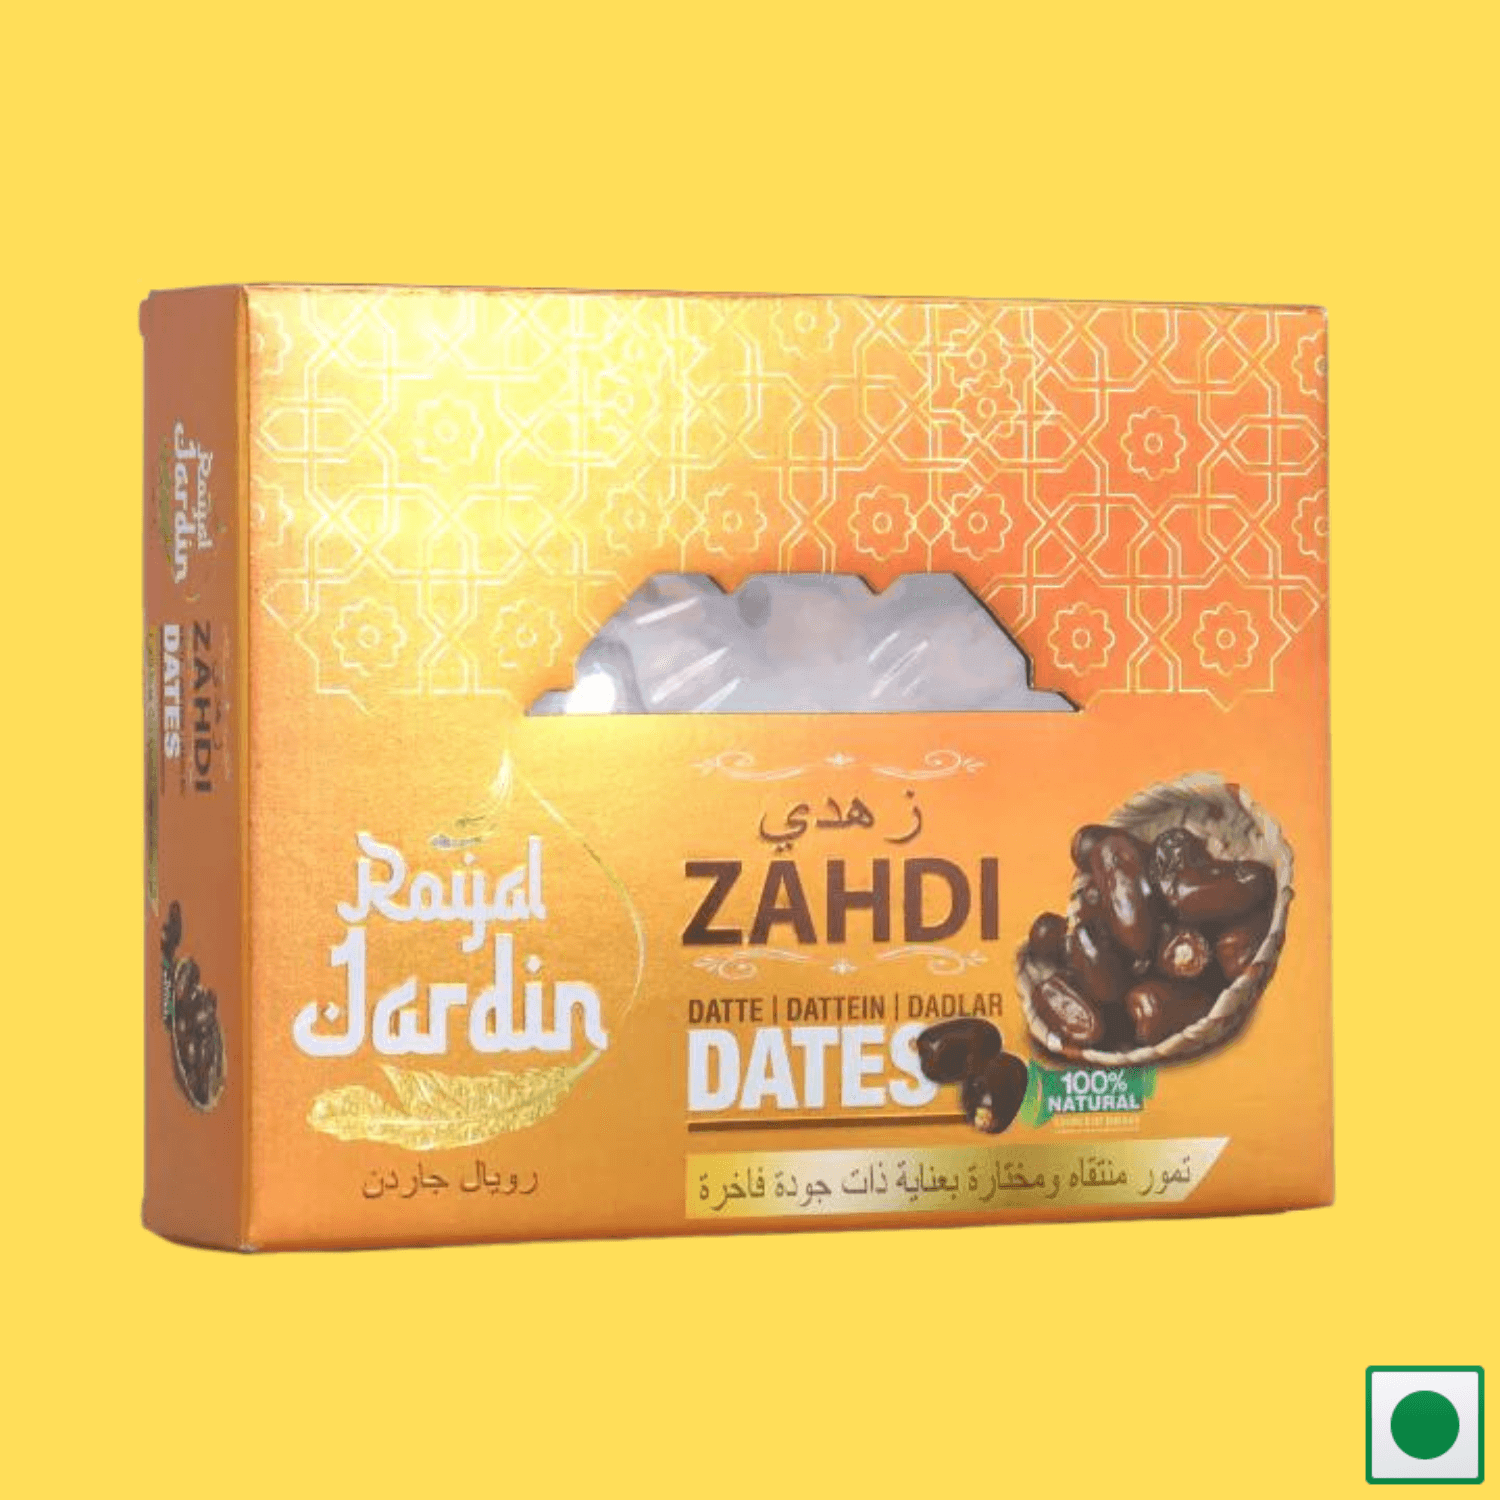 Royal Jardin Zahdi dates Box, 1Kg (IMPORTED) - Super 7 Mart